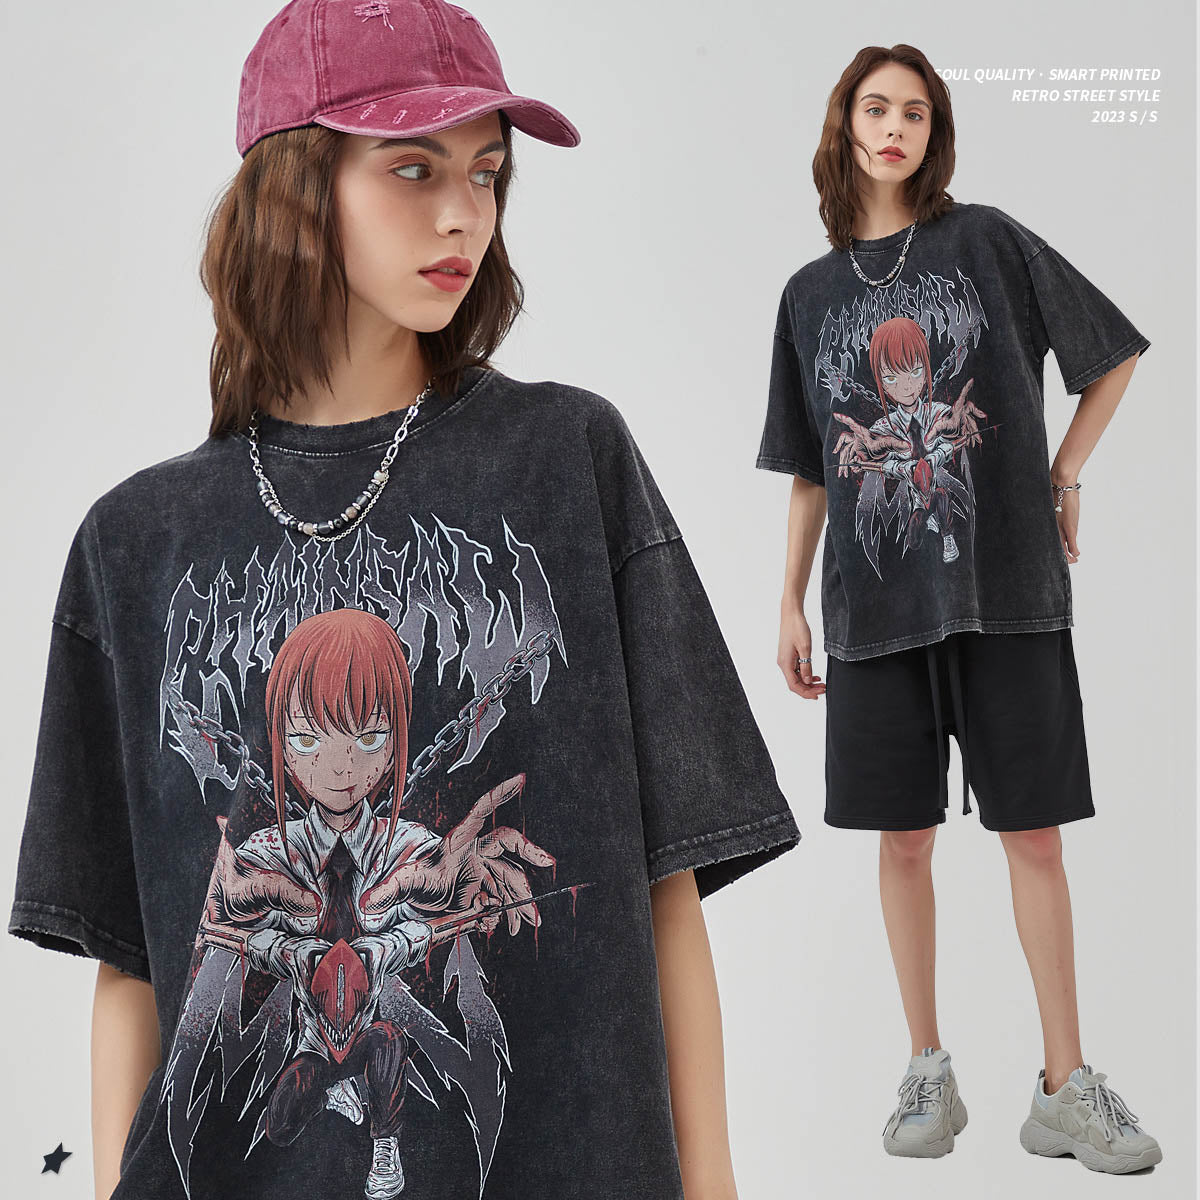 Unisex Anime Short Sleeve T-Shirt - US2EInc Apparel Plug Ltd. Co